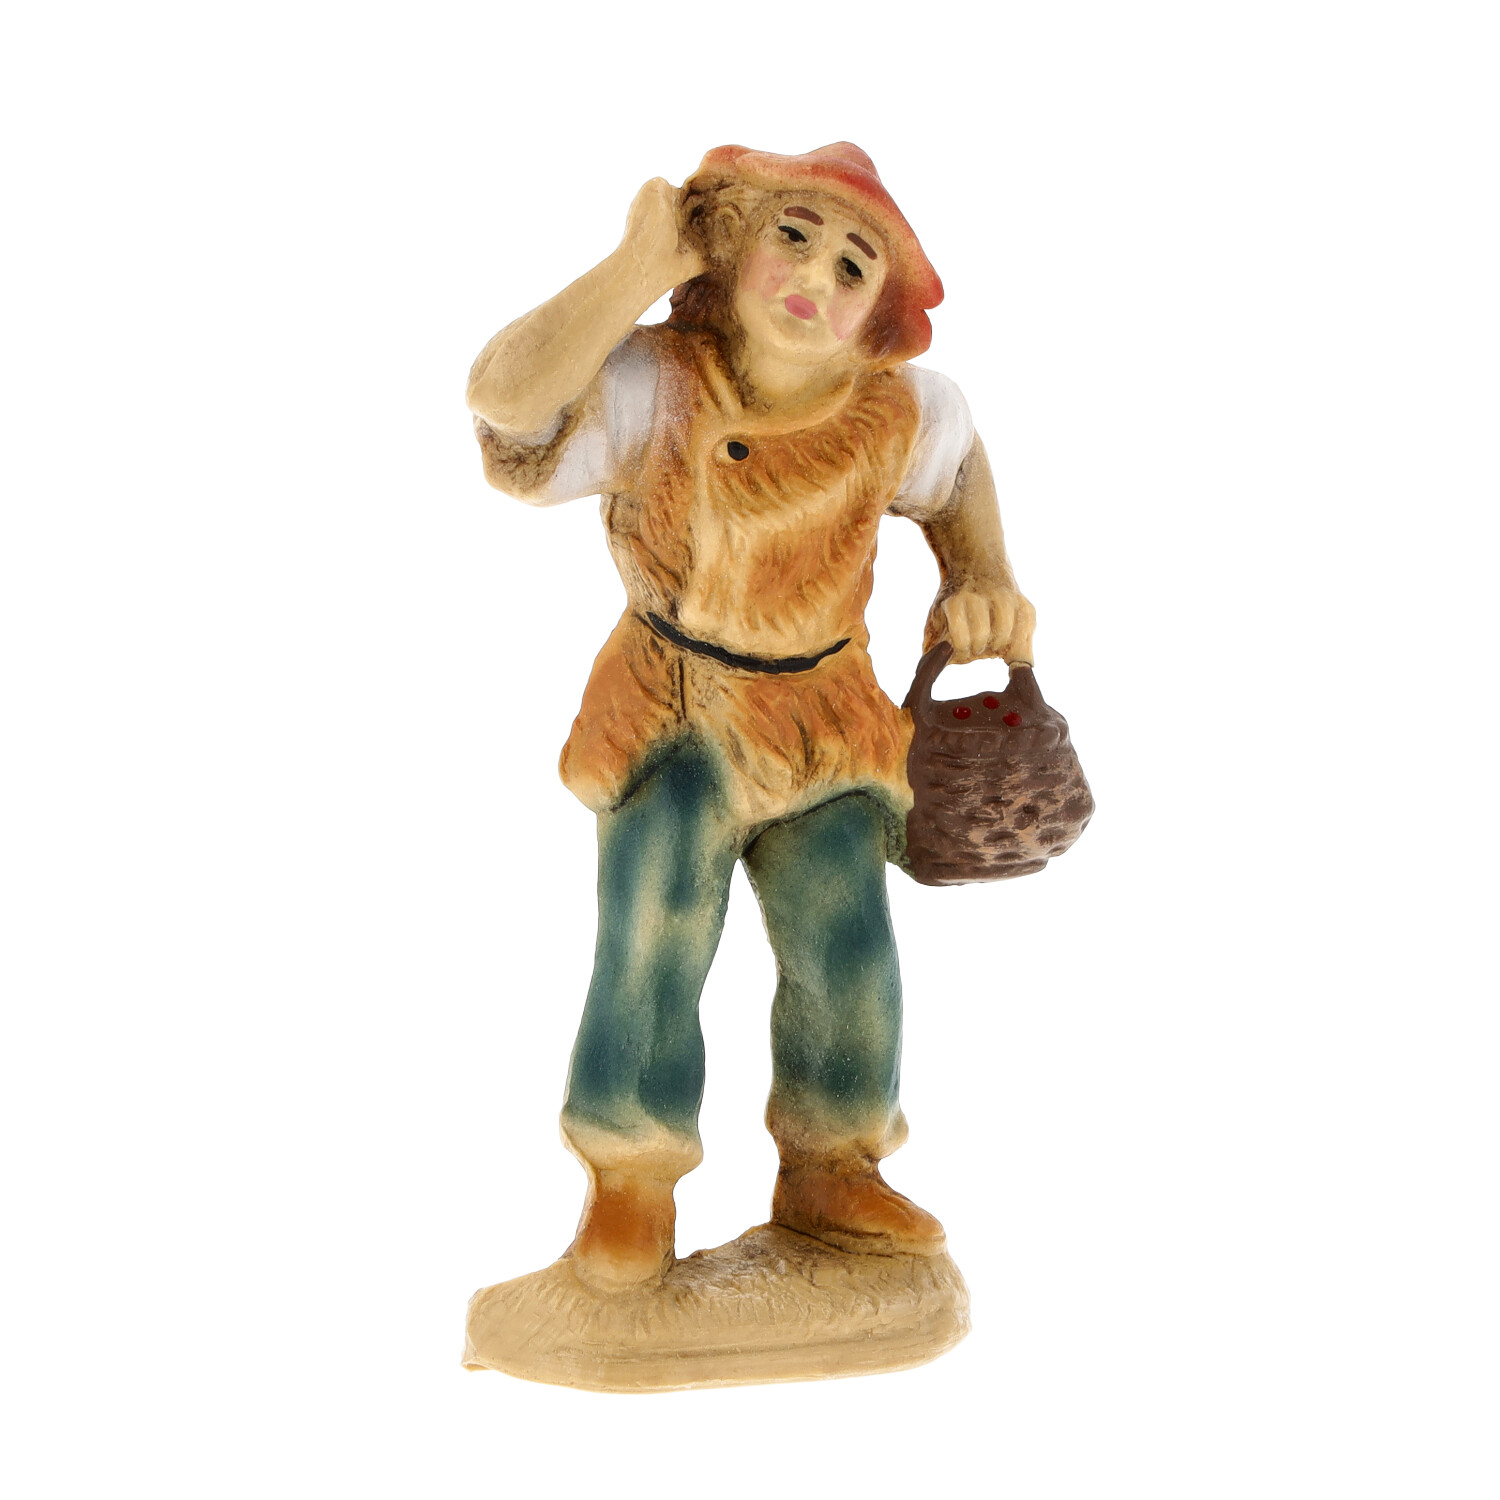 Shepherd with basket - Marolin Plastik - Resin Nativity figure - made in Germany